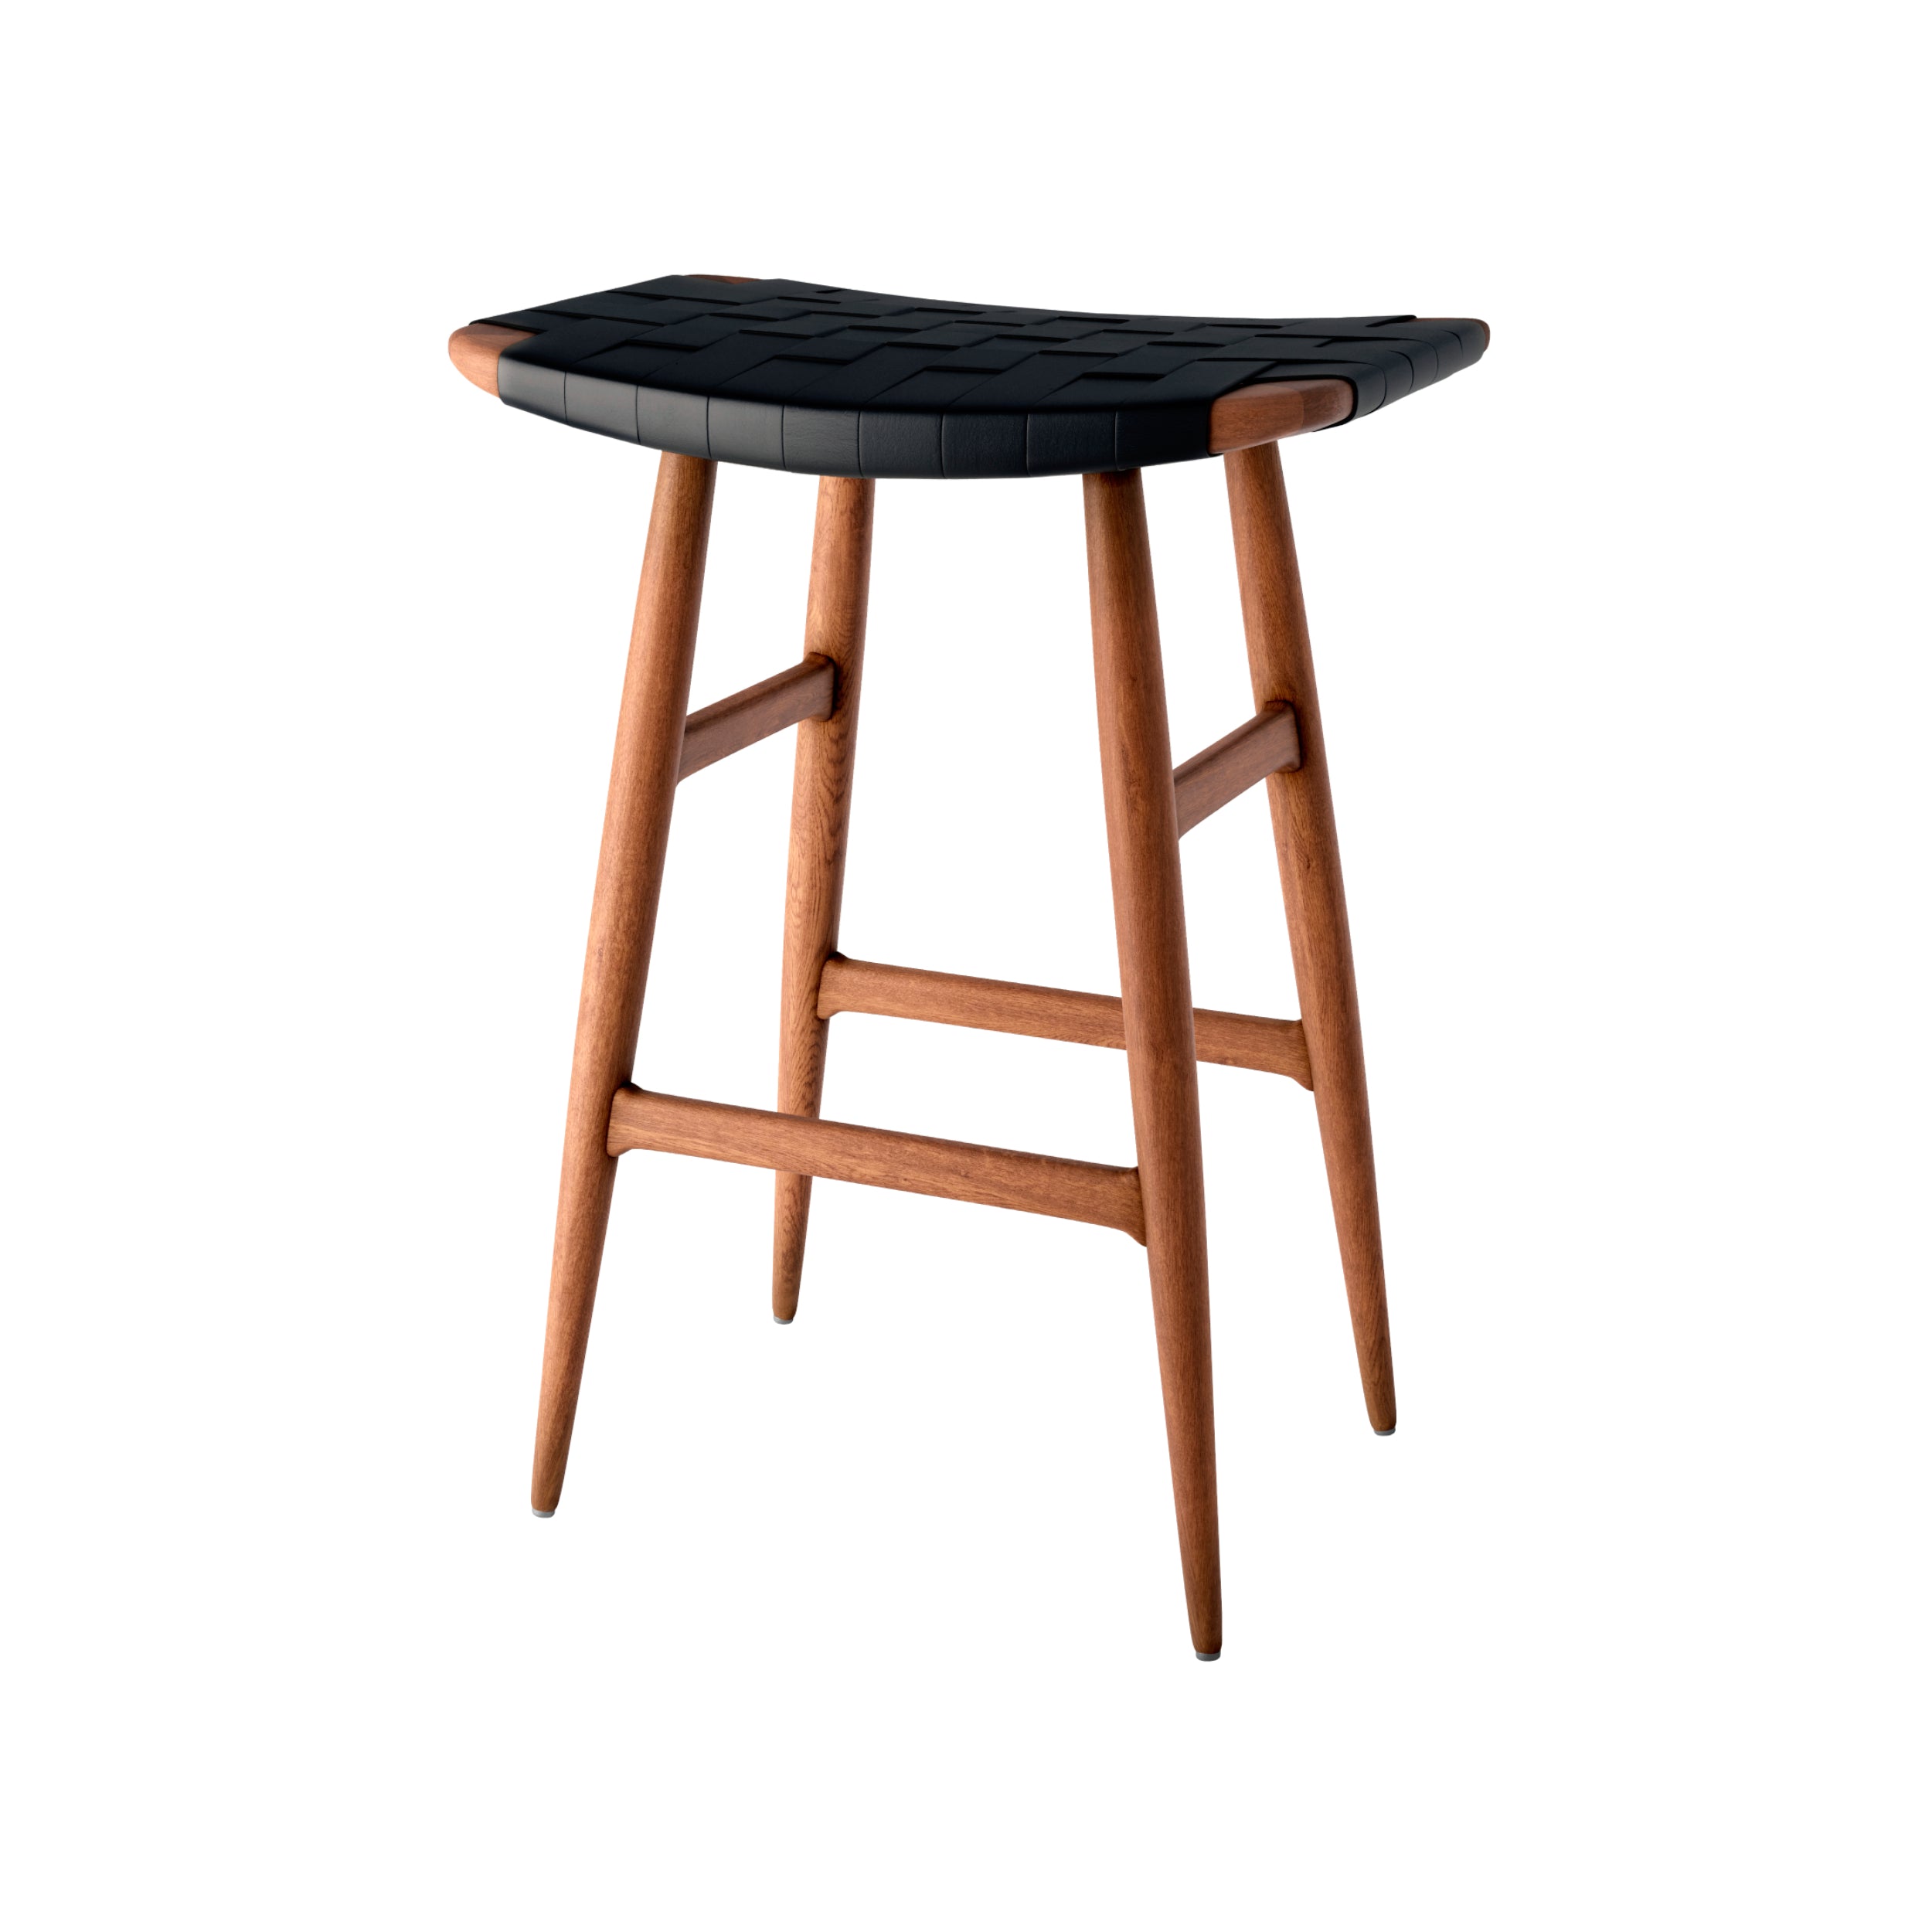 Freja Bar Stool: Counter + Natural Walnut + Leather Stripe Seat